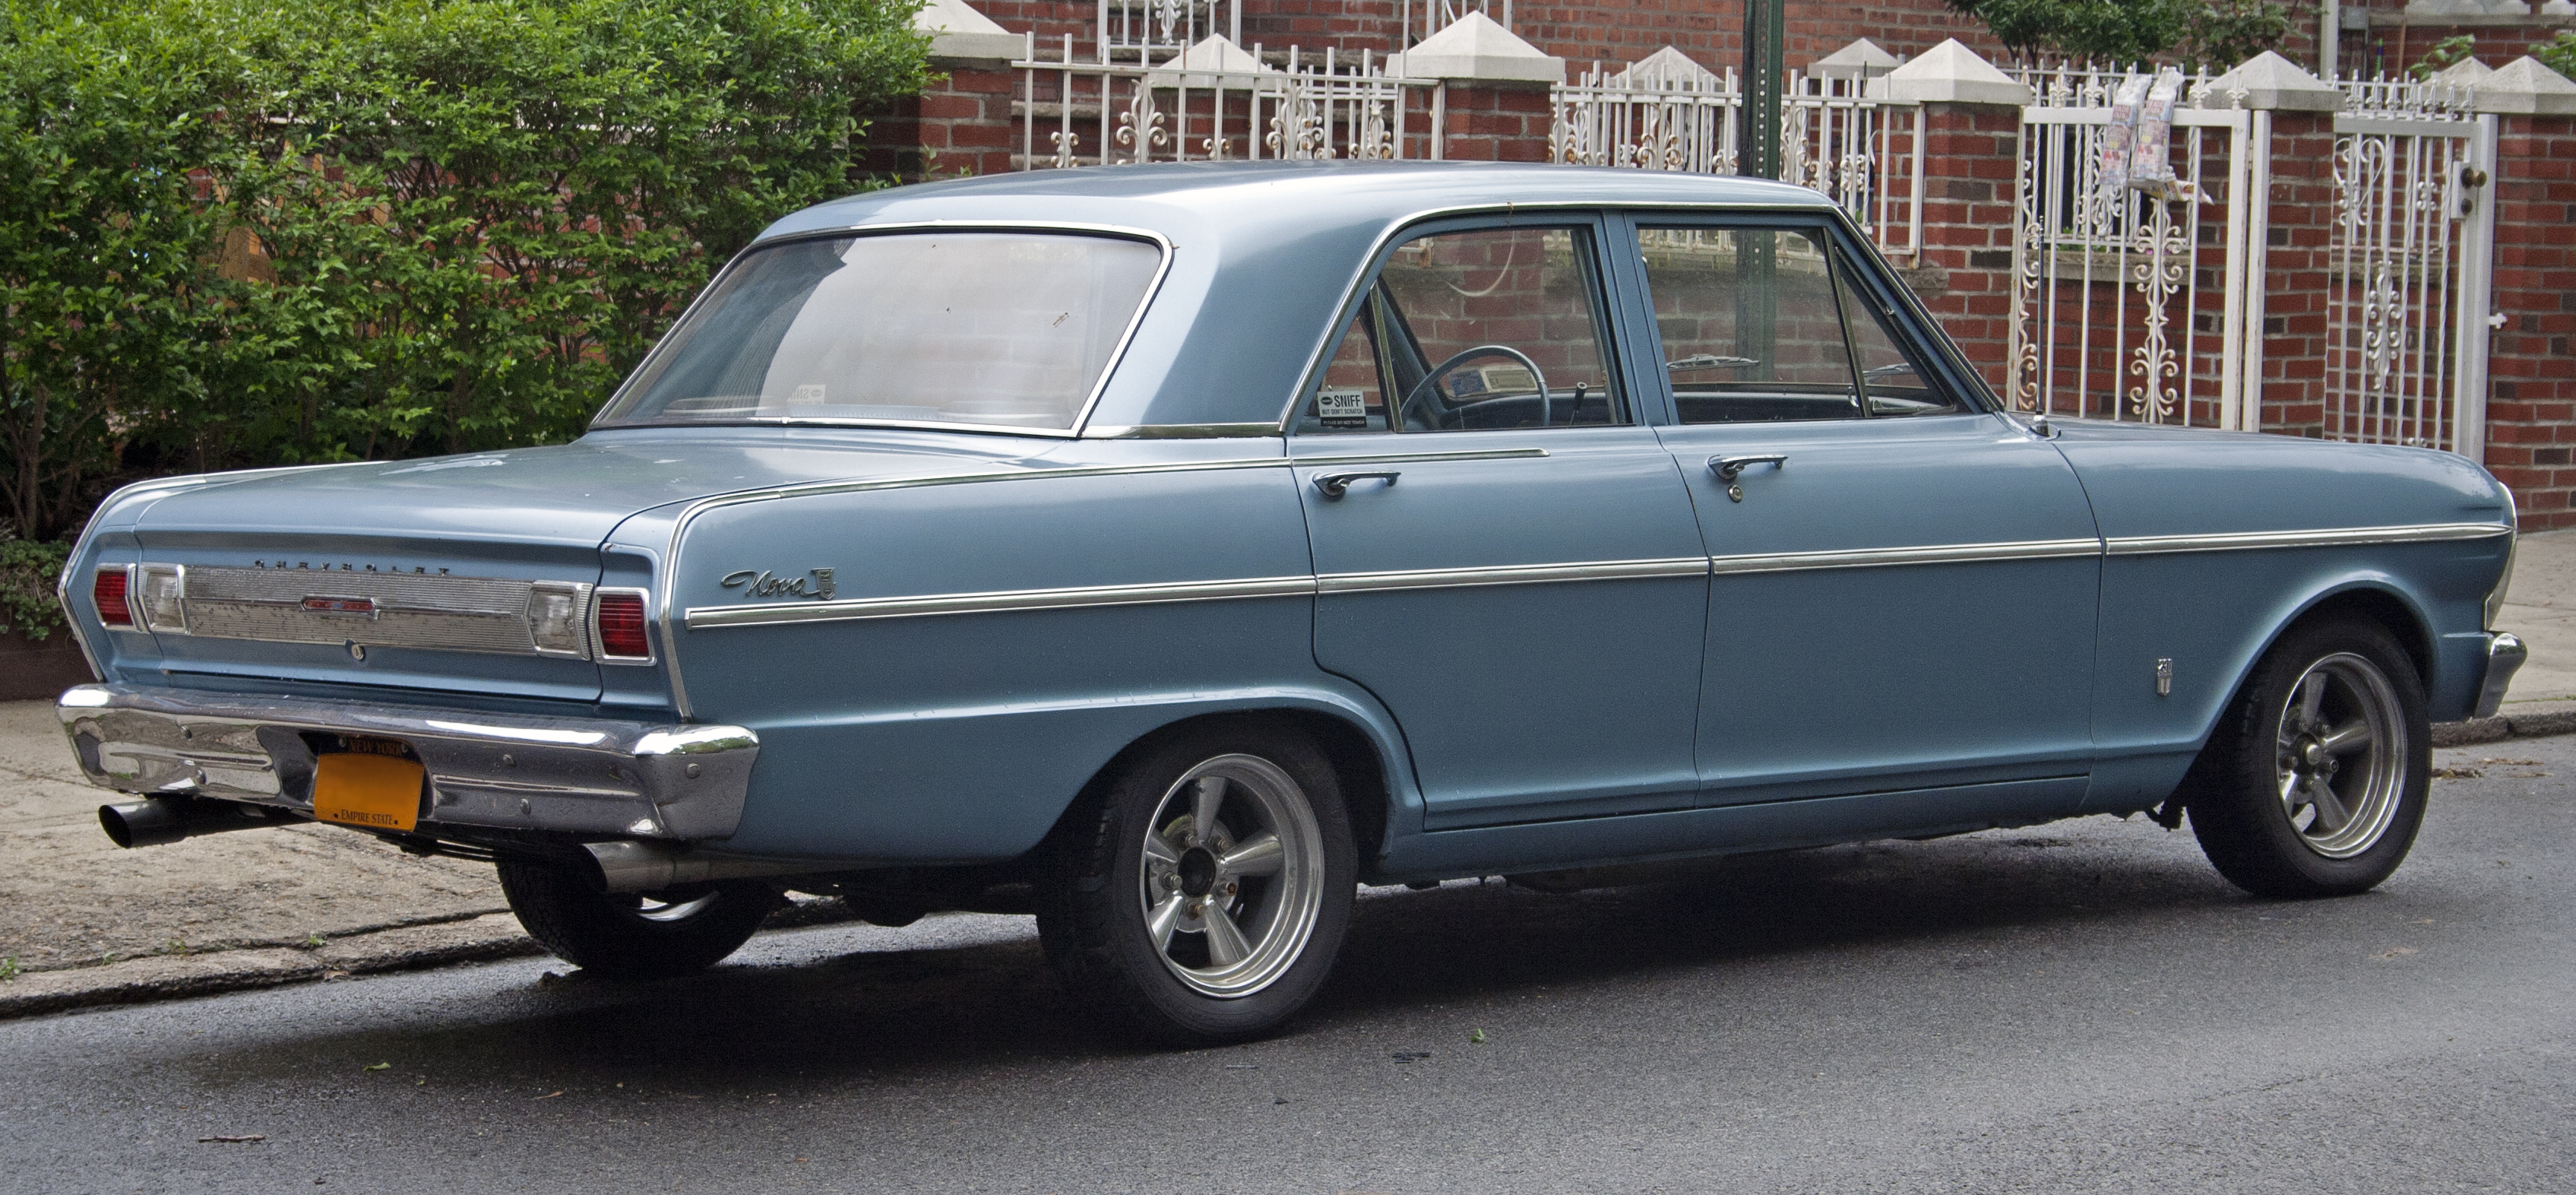 1965 Chevrolet Nova High Quality Background on Wallpapers Vista